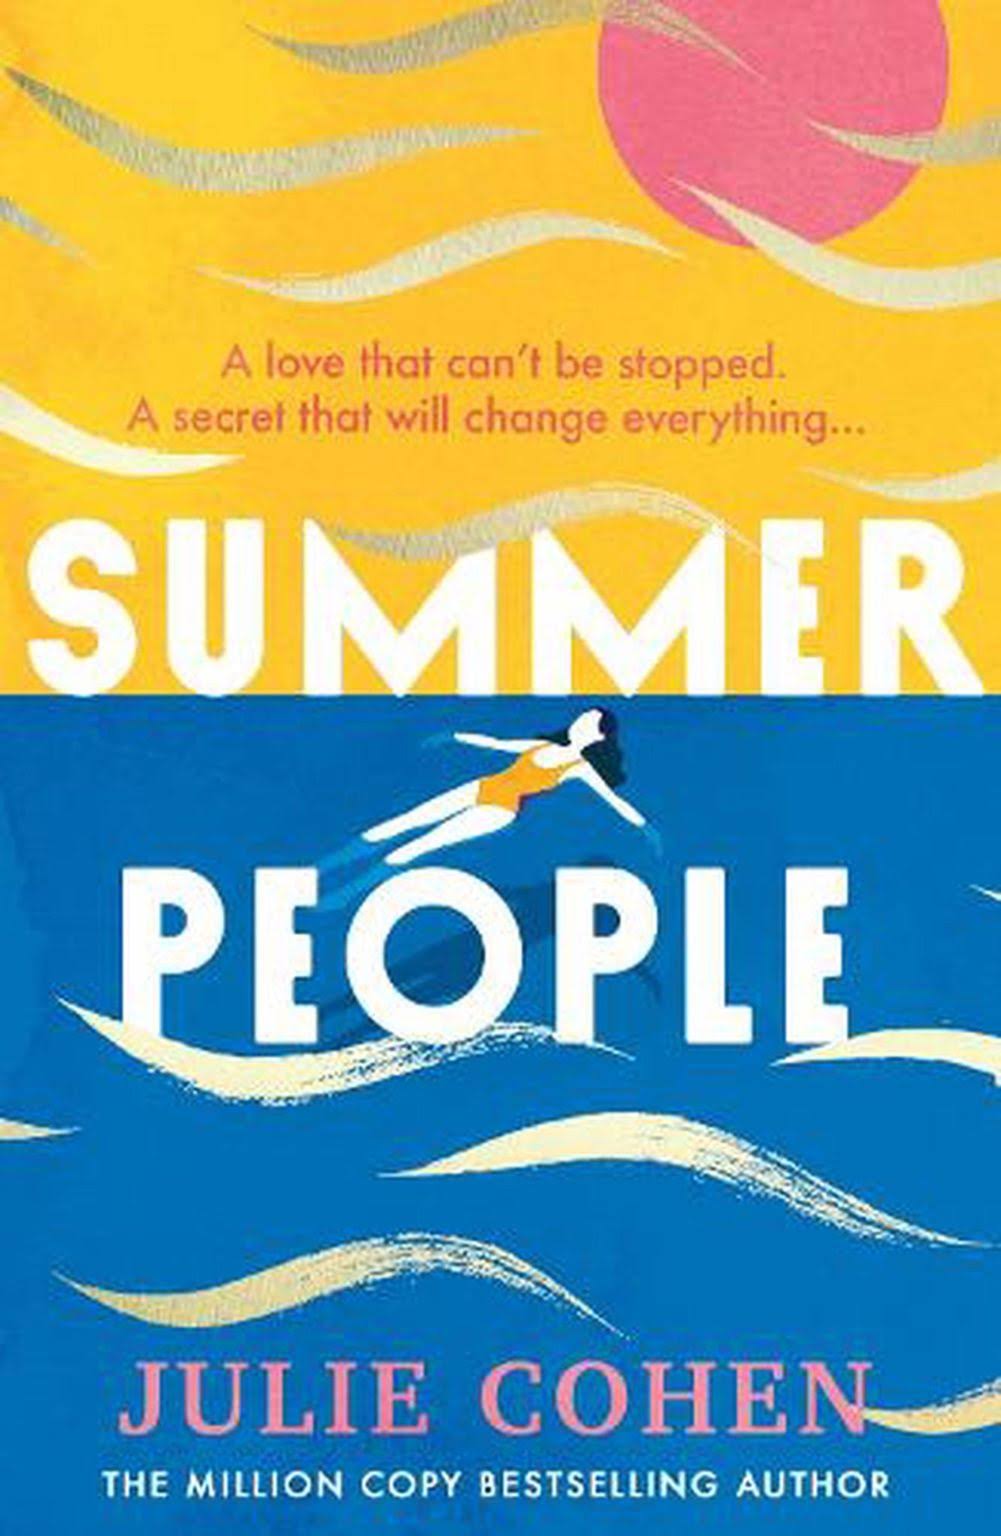 Summer People by Julie Cohen